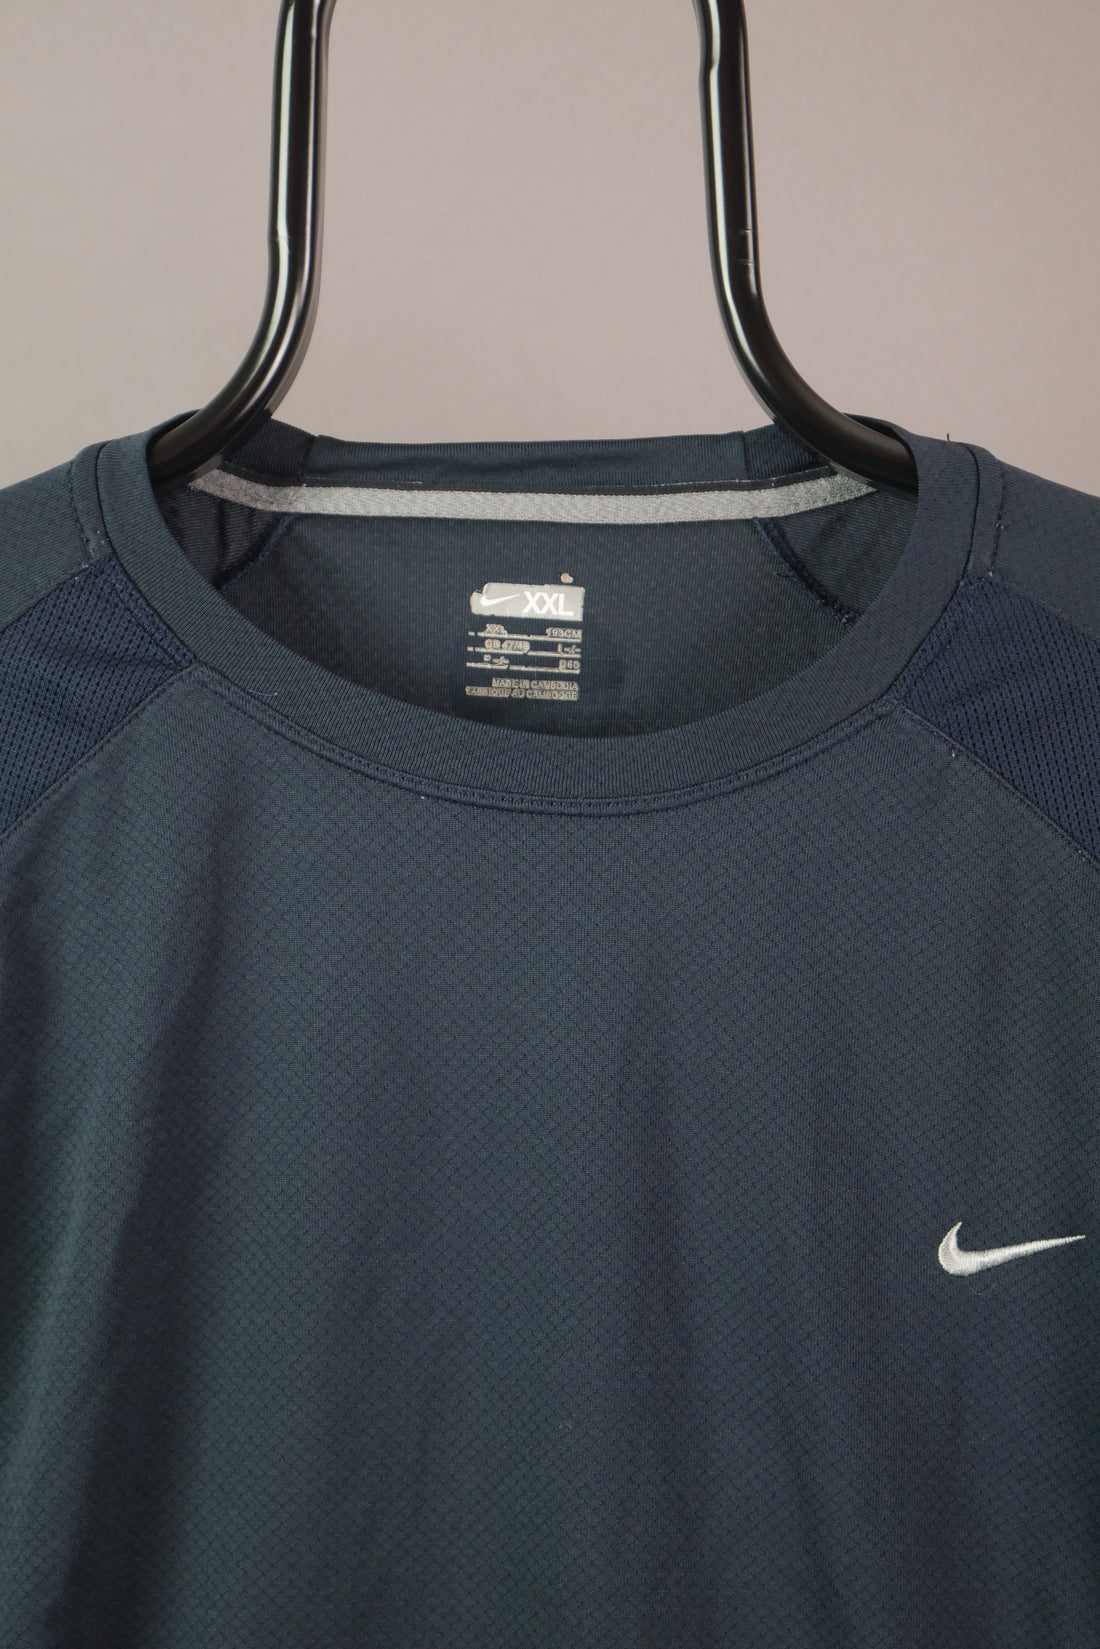 The Nike Training T-Shirt (2XL)